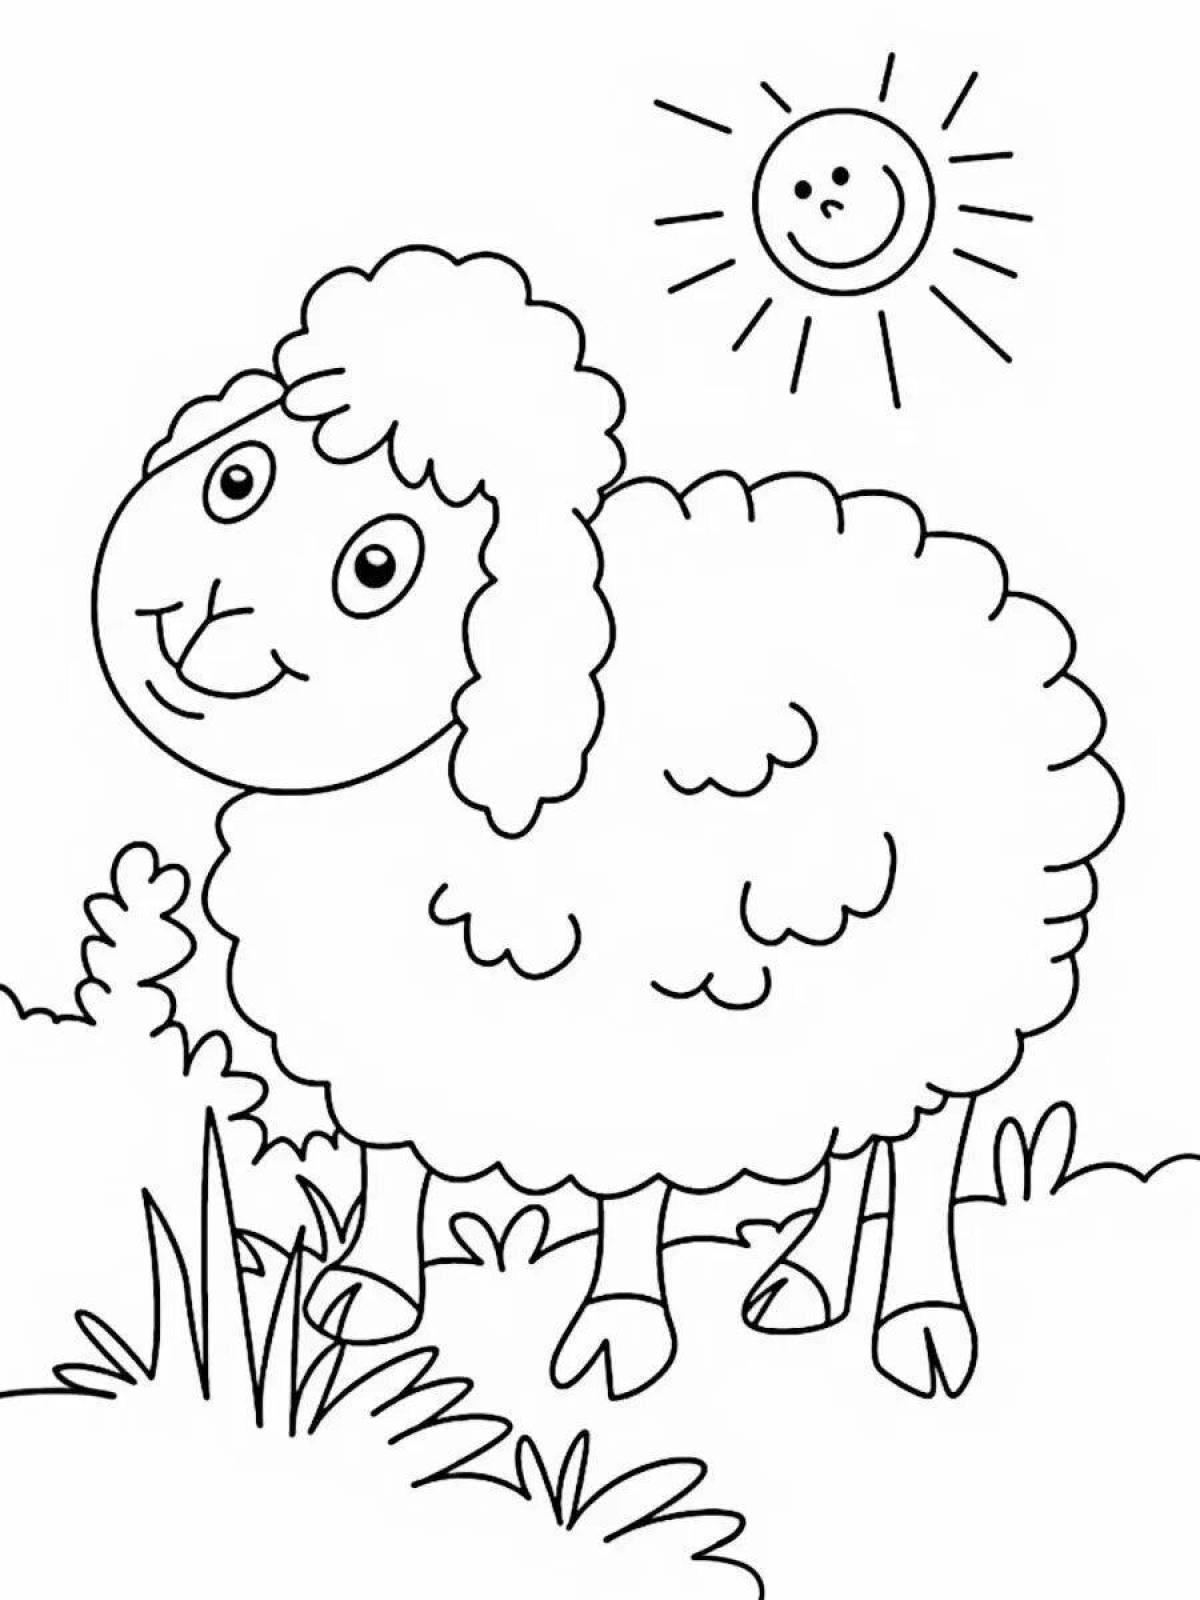 Lamb inflatable coloring book